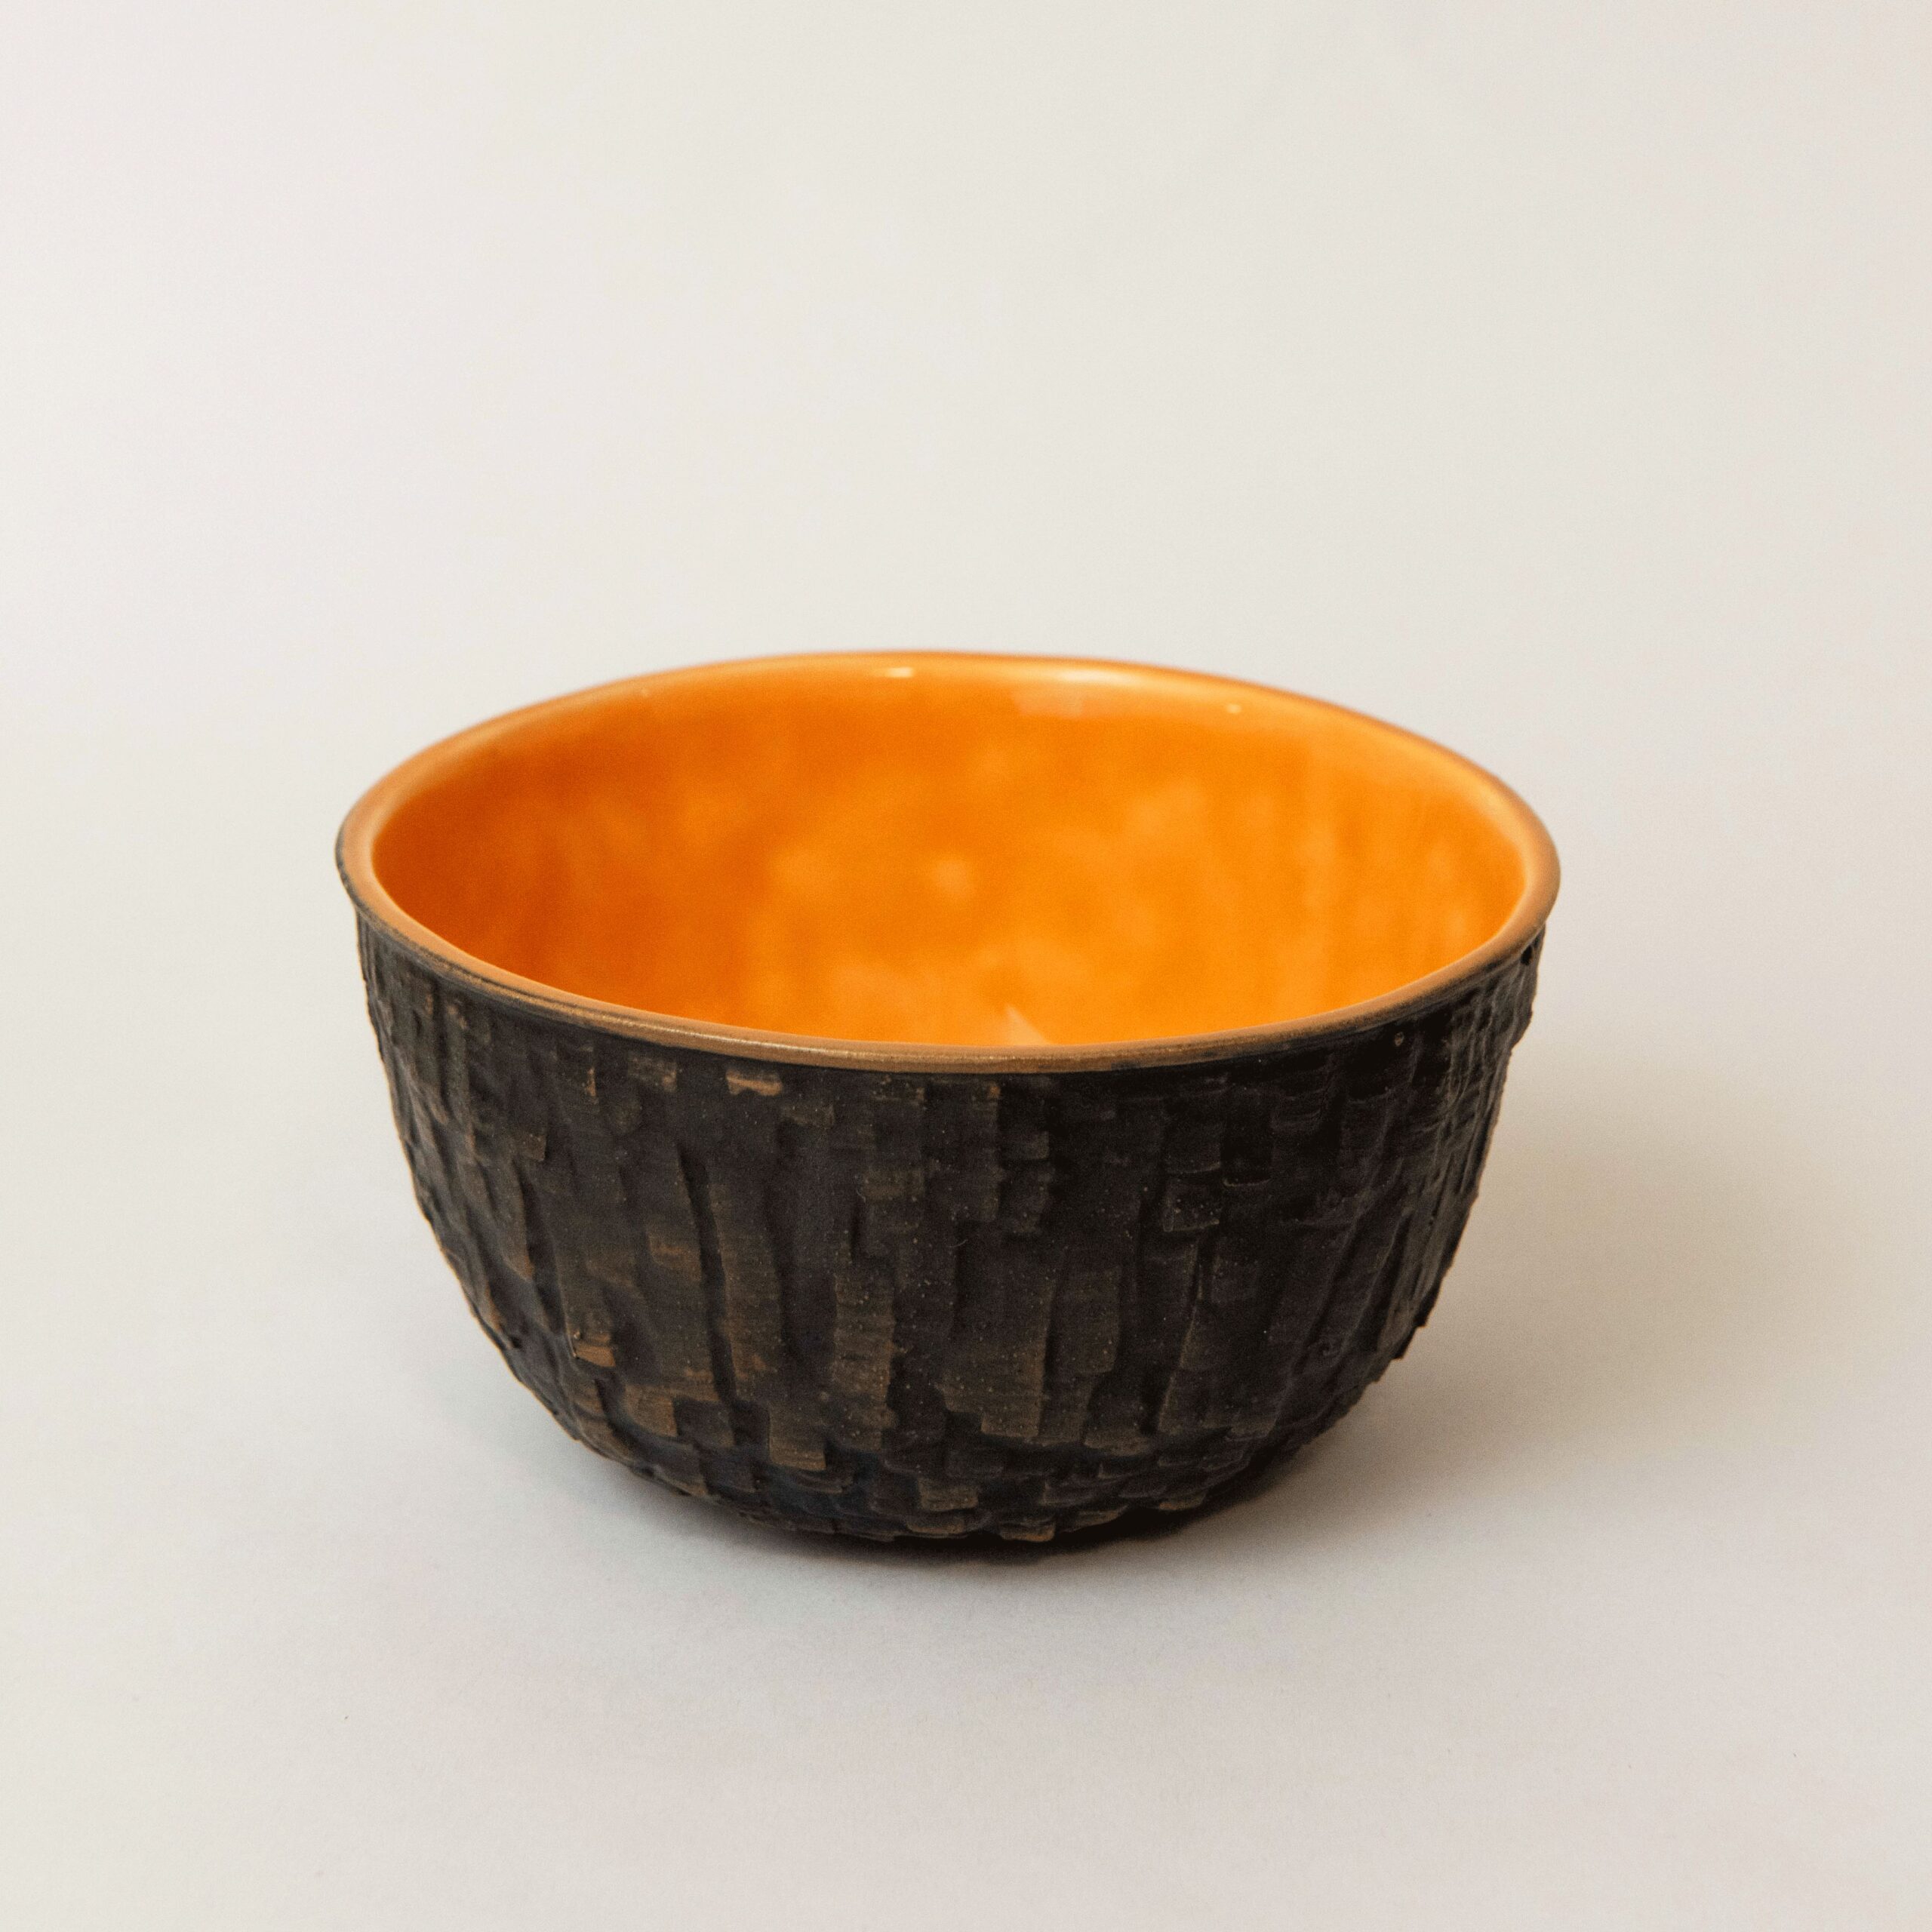 Studio Saboo: Rock Bowl in Orange Product Image 1 of 1